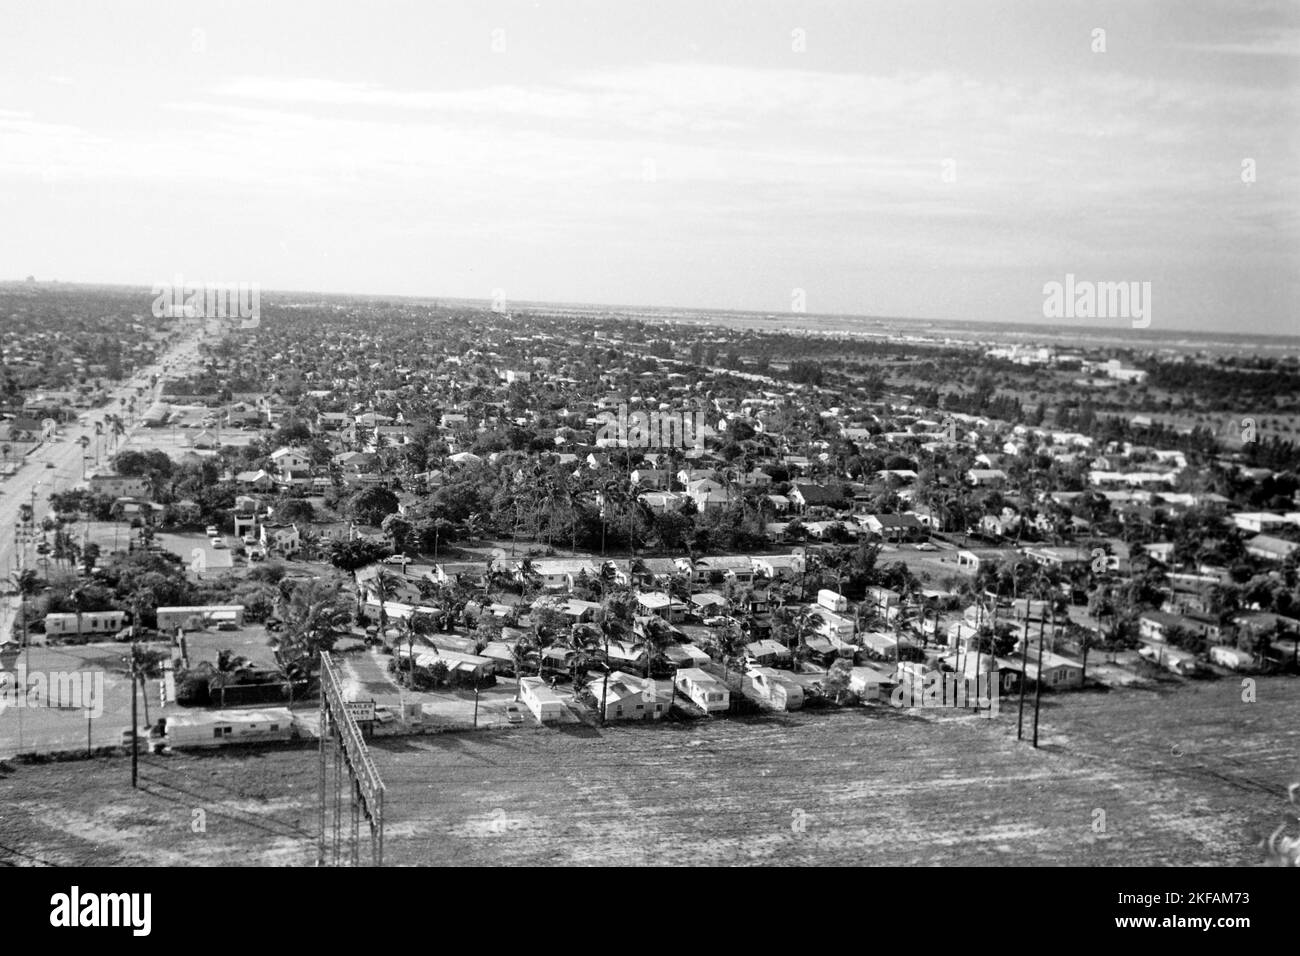 Blick auf Fort Lauderdale in Florida, USA 1965. Vista di Fort Lauderdale in Florida, USA 1965. Foto Stock